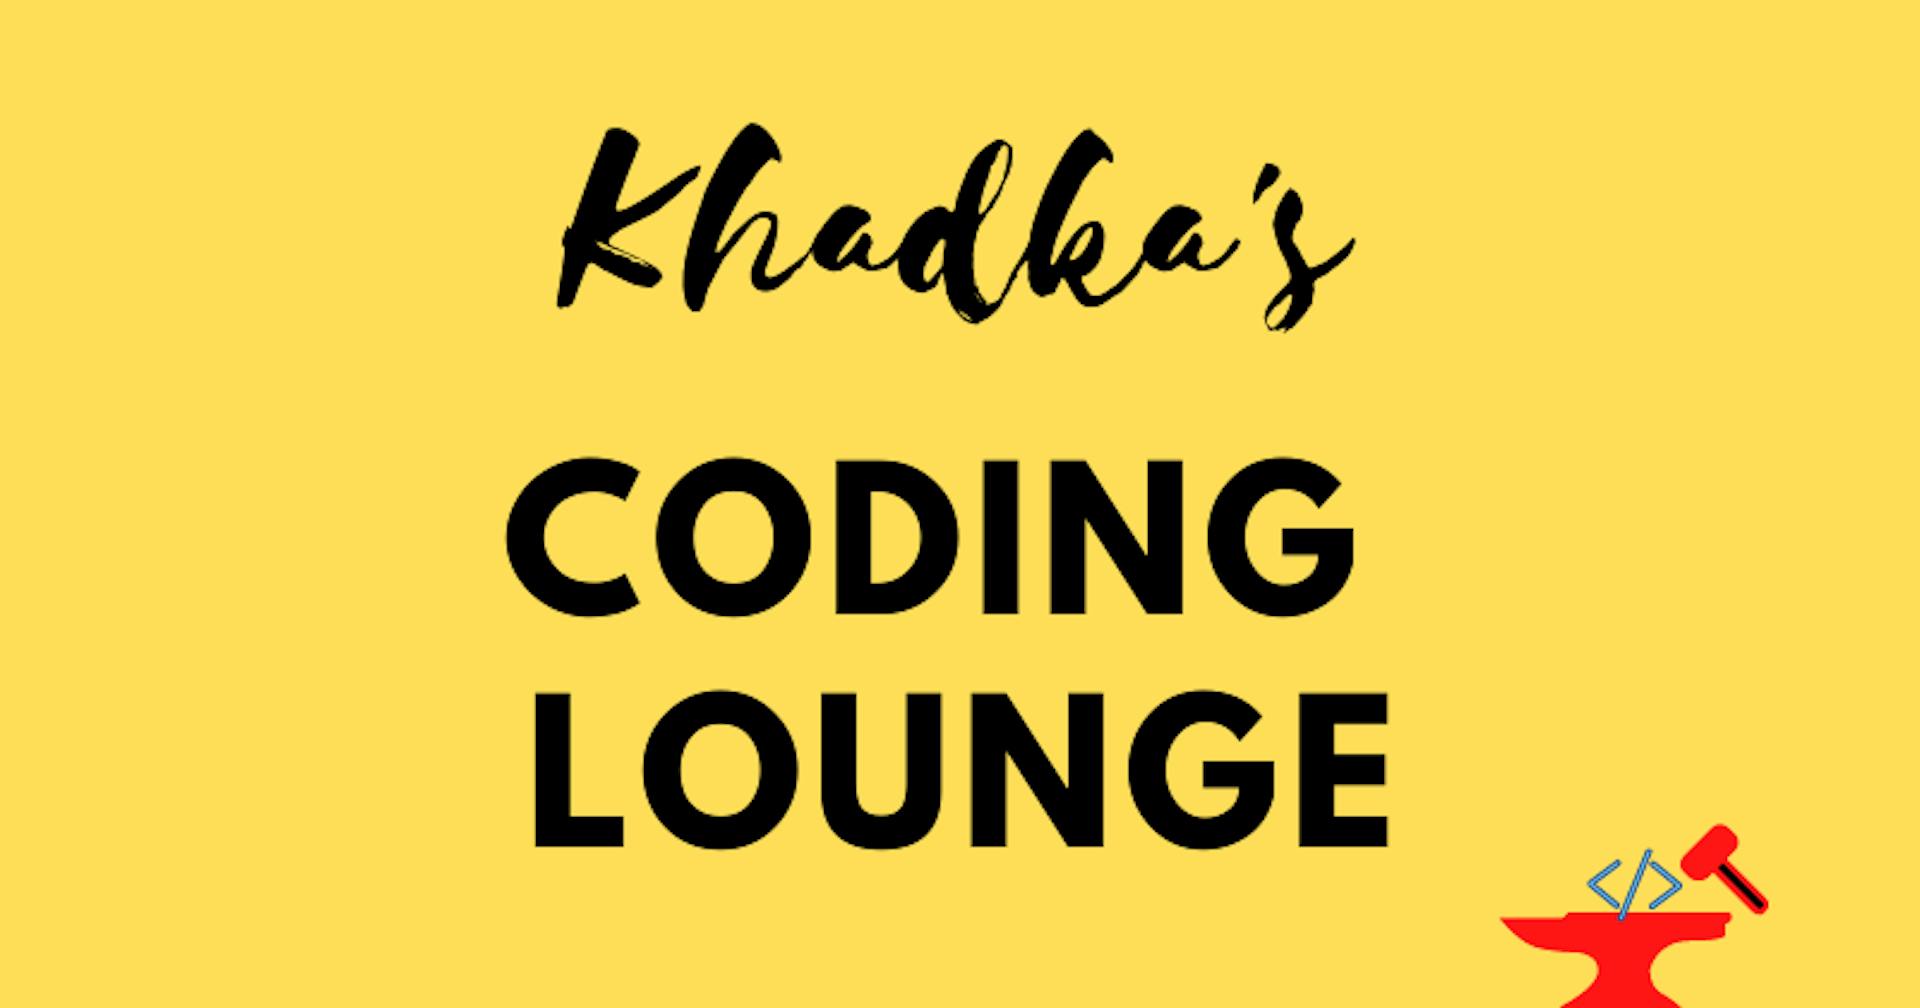 Blog By Khadka's Coding Lounge